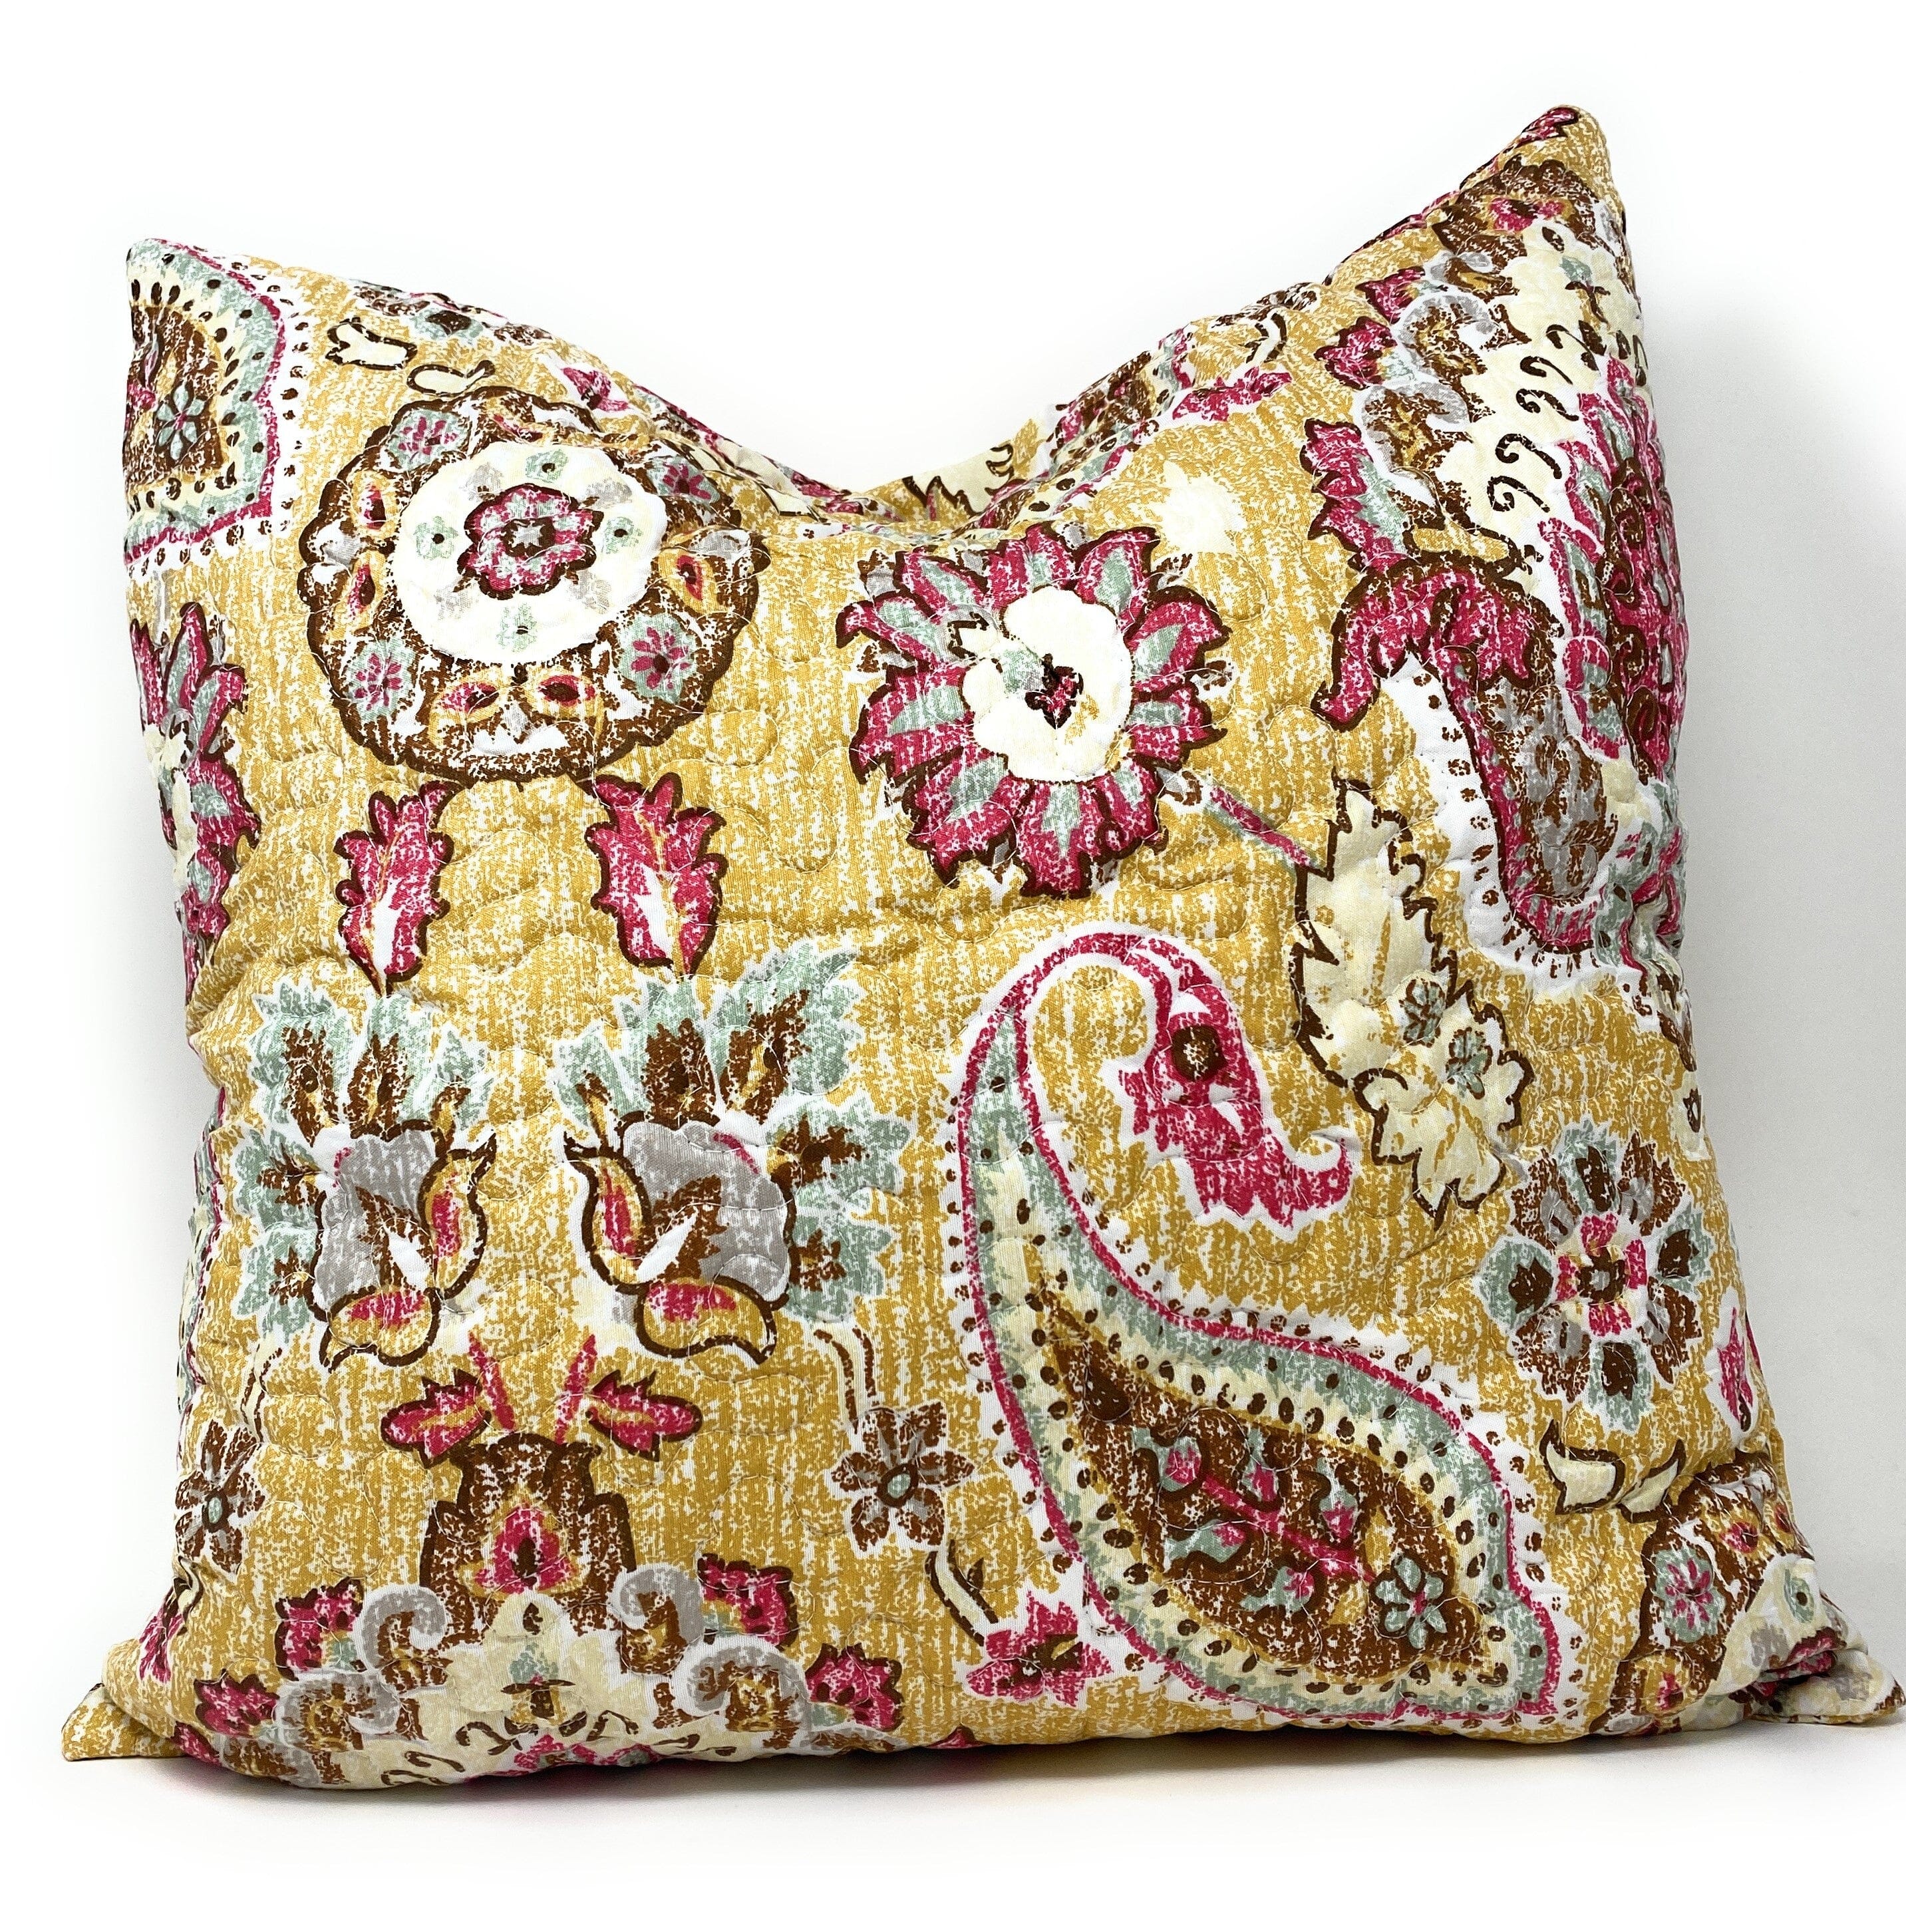 Tache Floral Paisley Damask Boho Chic Gold Royal Medallion Cushion Cover 2-Pieces (SD5357) - Tache Home Fashion